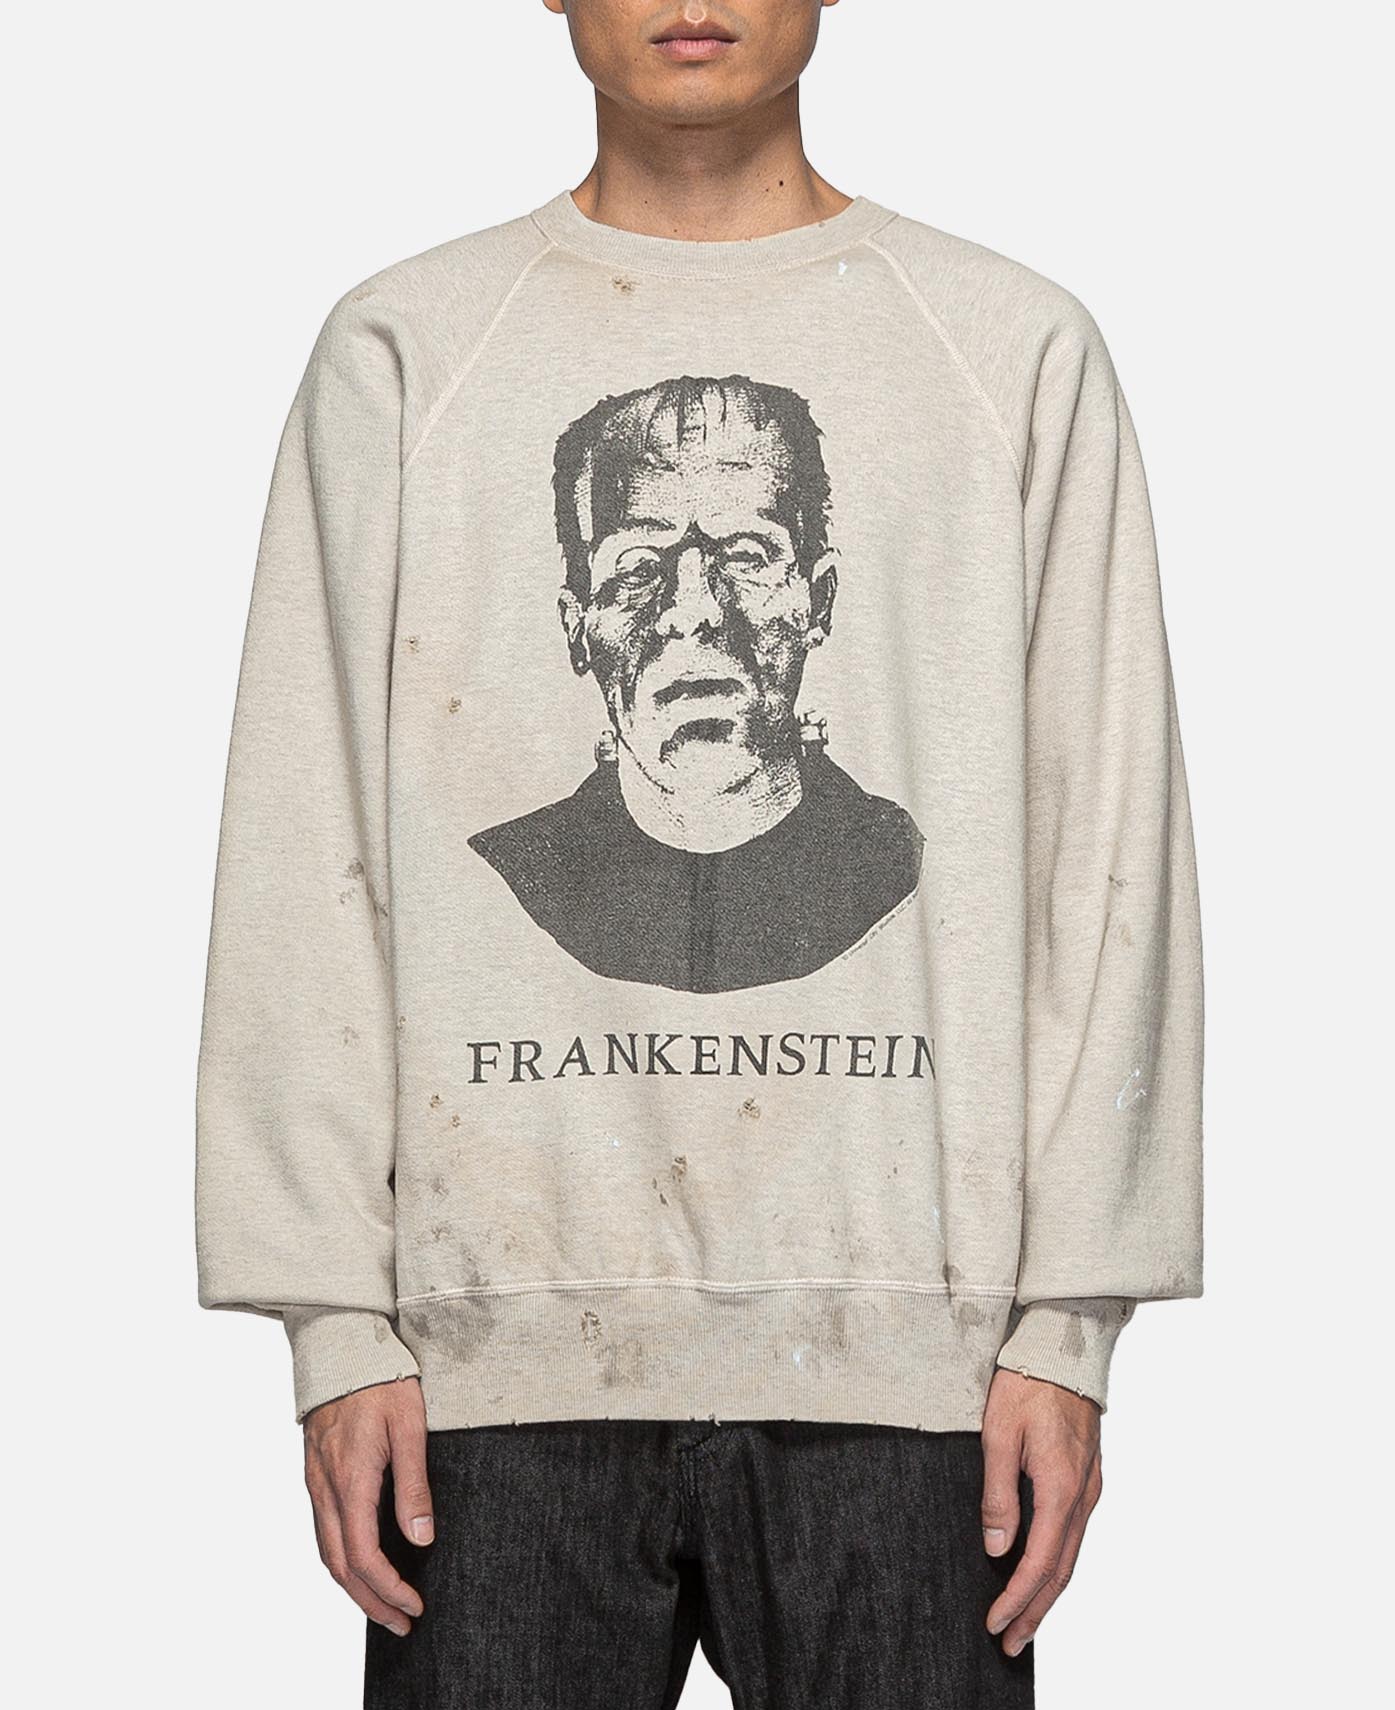 saint michael frankenstein sweatshirt